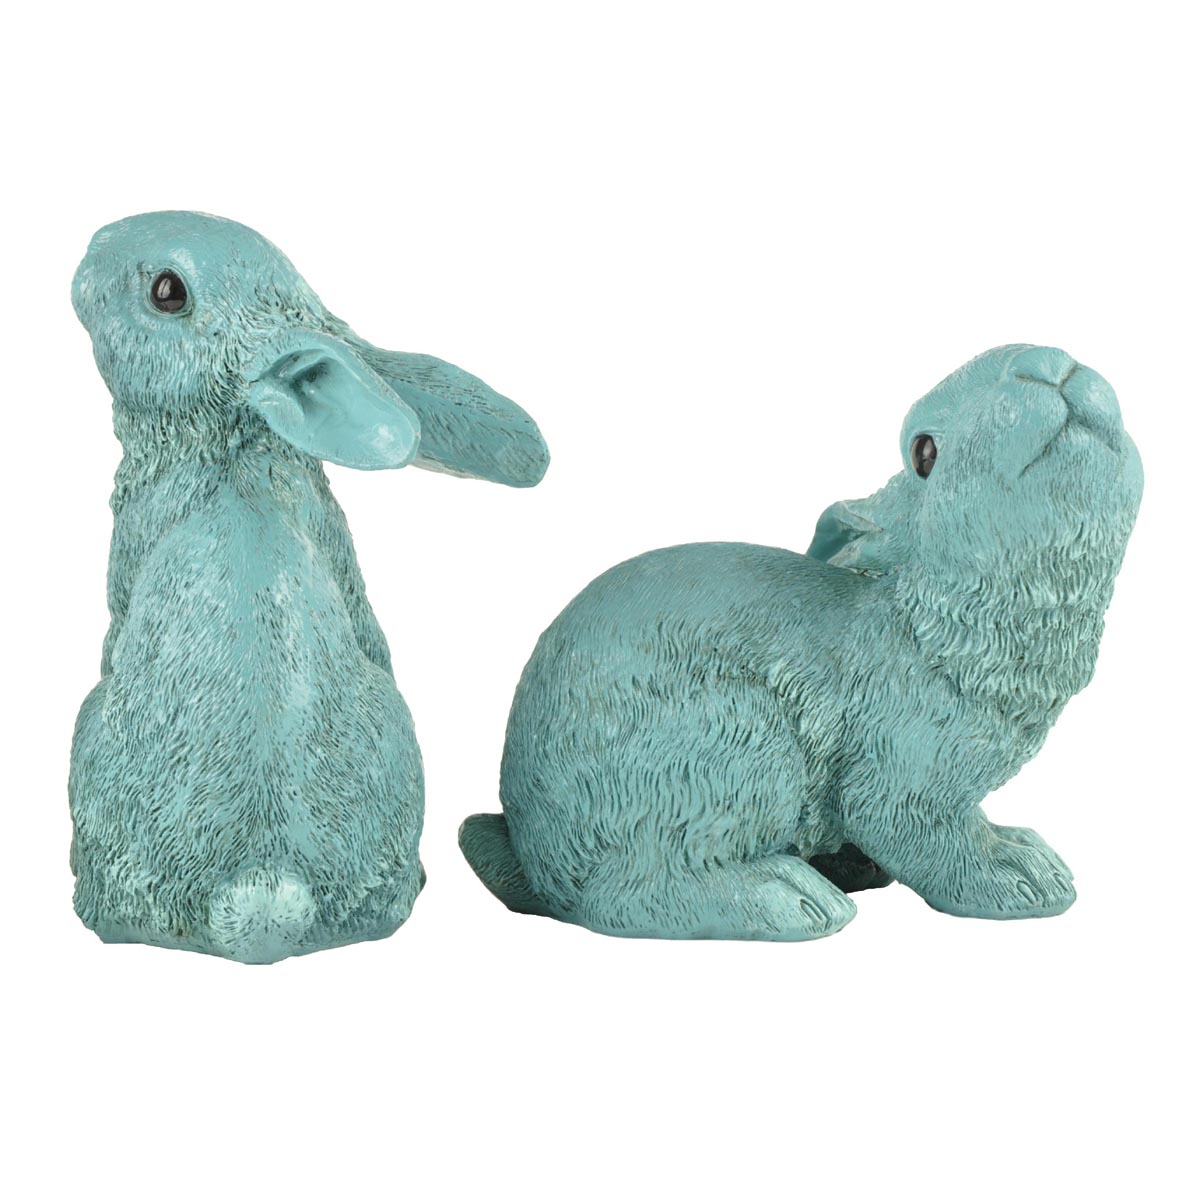 Ennas decorative vintage easter bunny figurines polyresin micro landscape-1